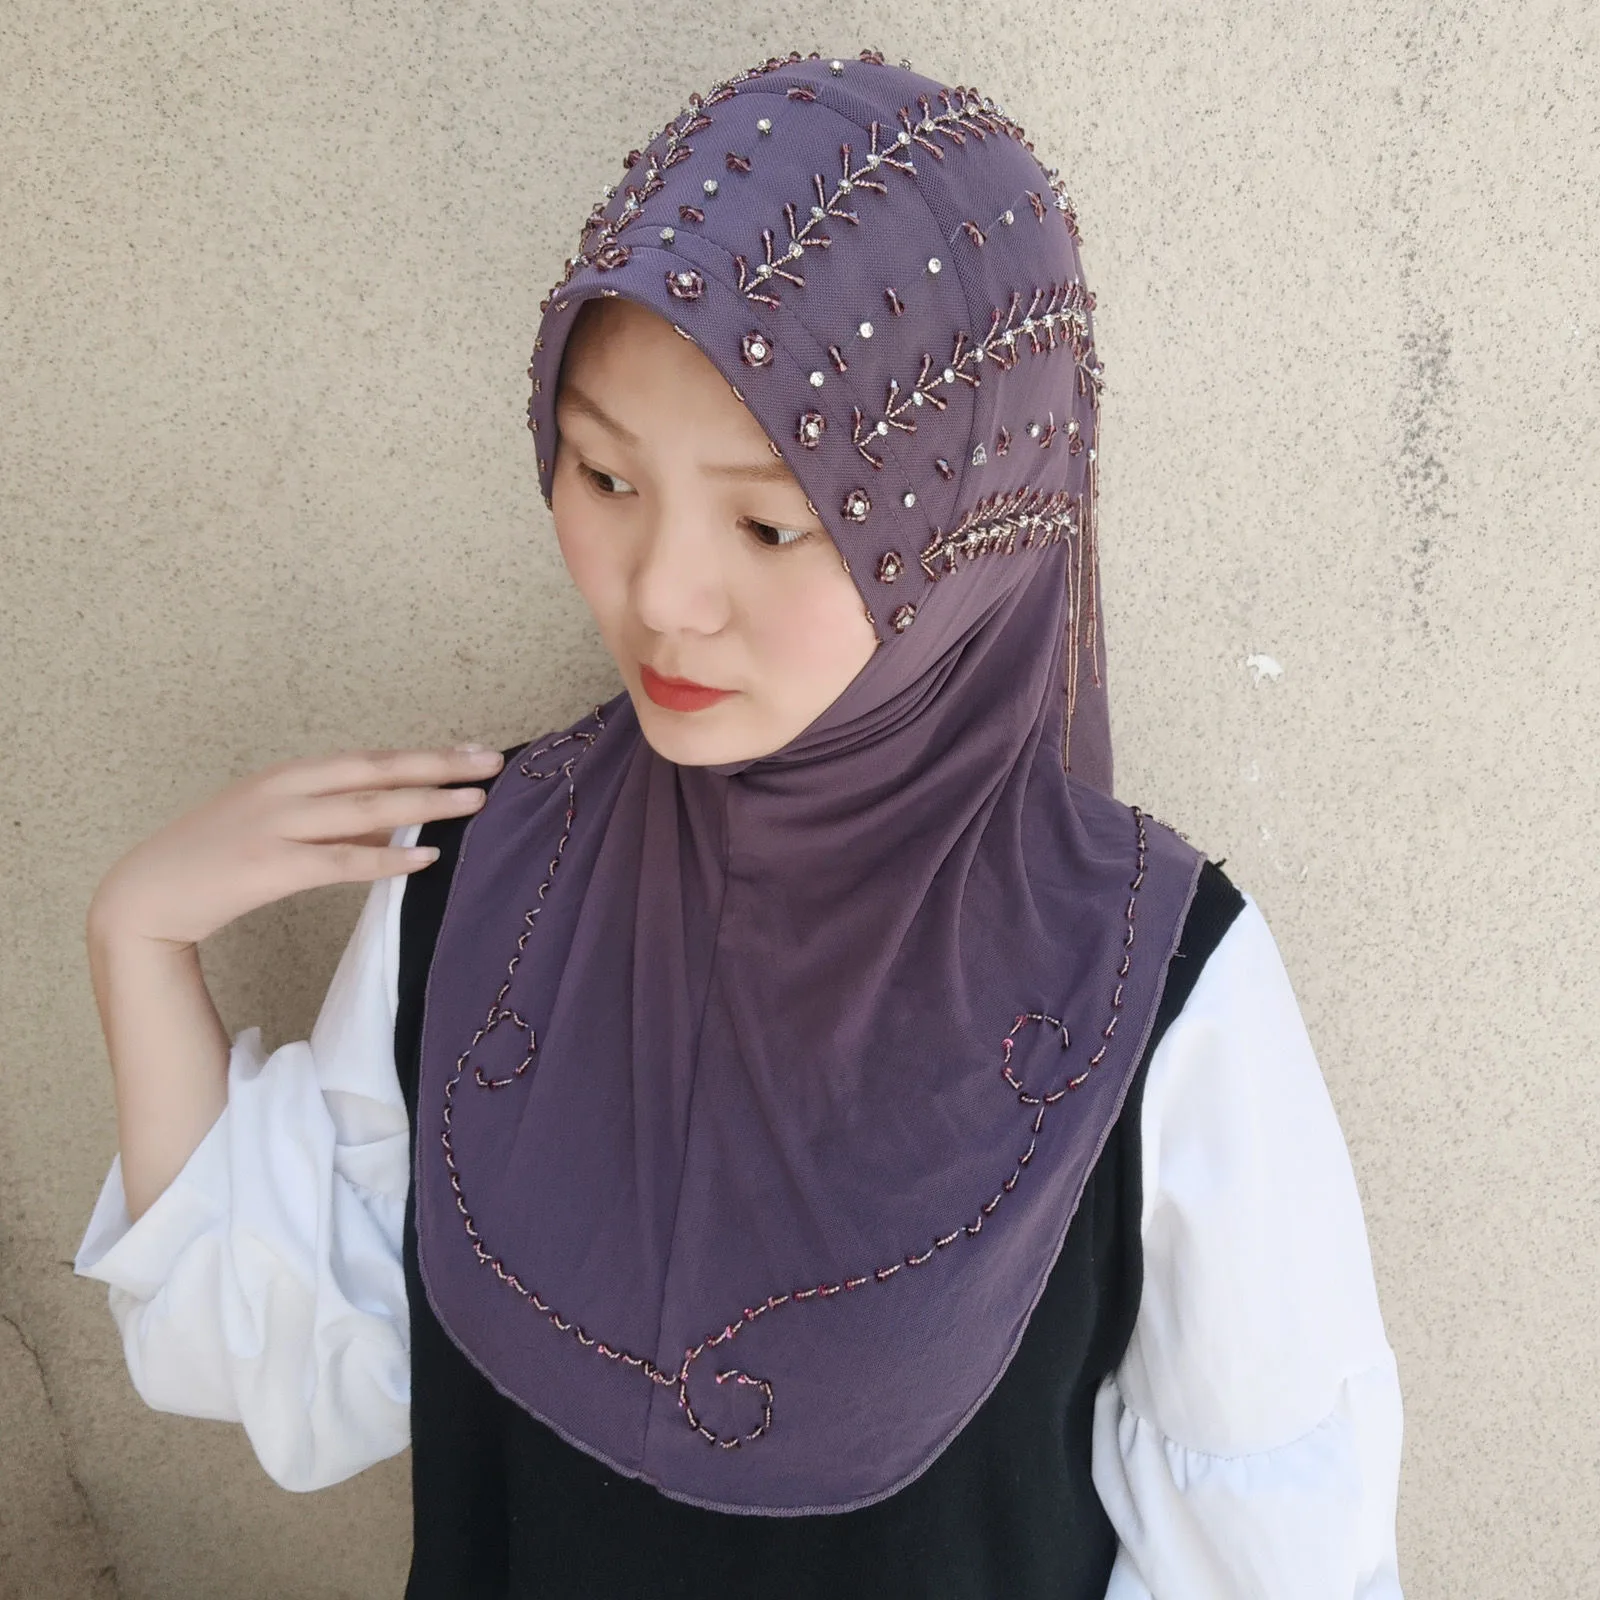 Hijab arejado para mulheres muçulmanas, roupas muçulmanas, xales elegantes